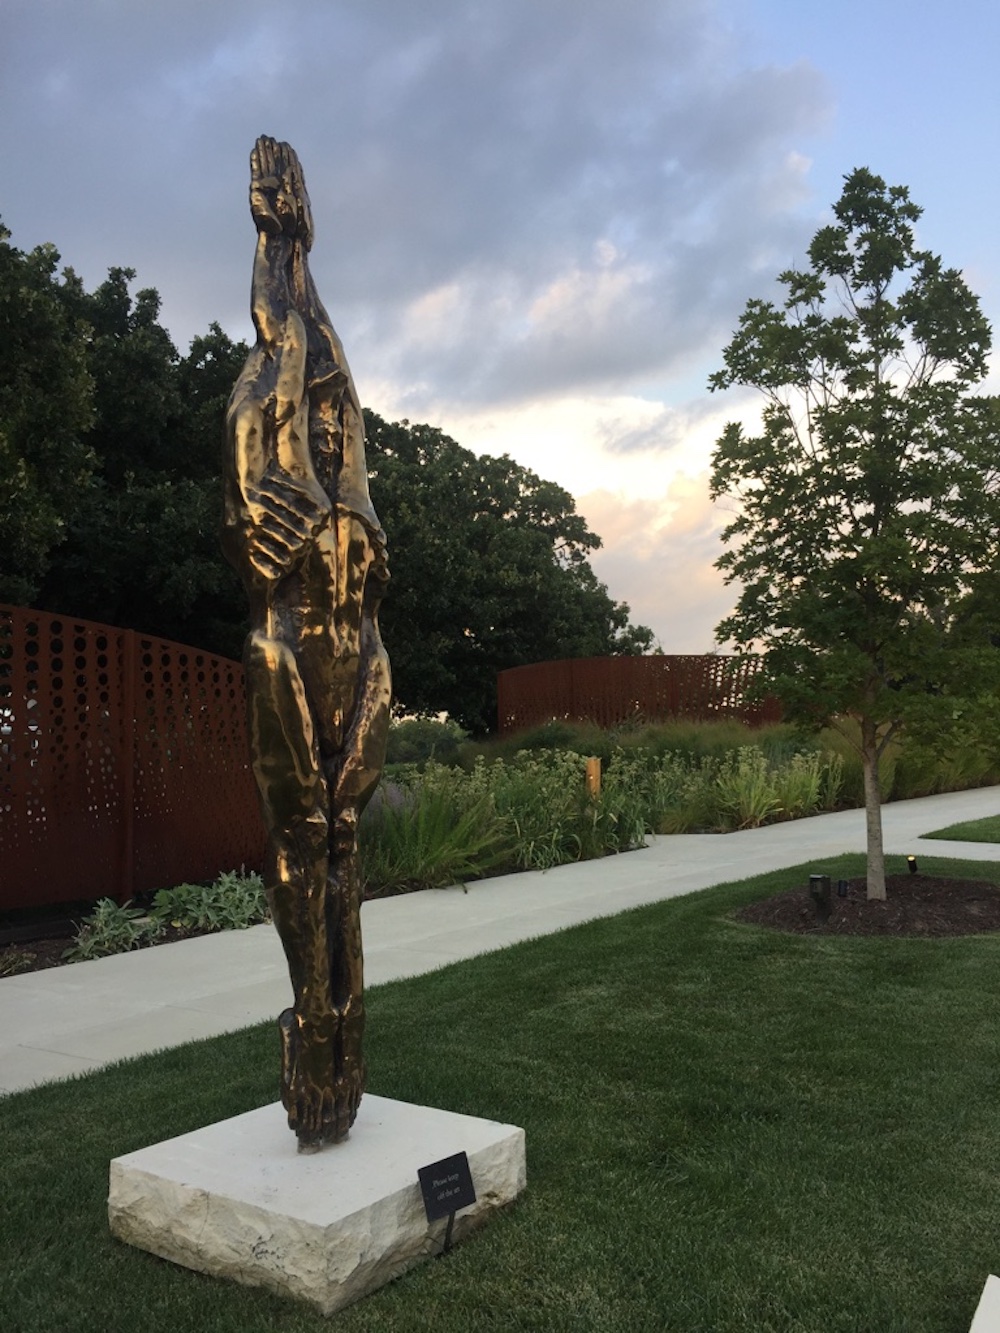 Metallic sculpture of an elongated torso outside of the Wichita Art Museum in Wichita, Kansas